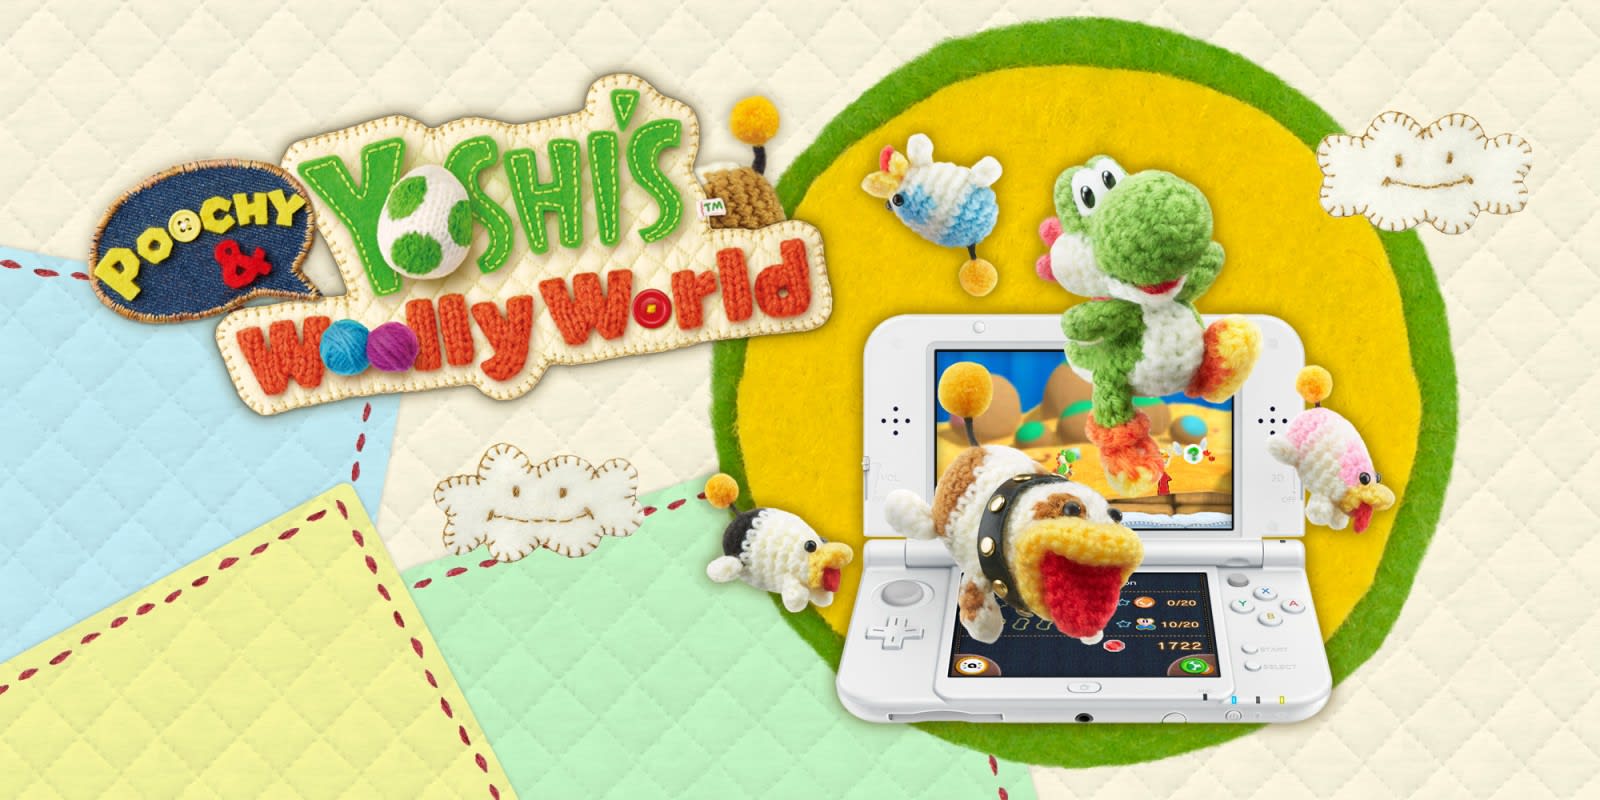 Poochy & Yoshi's Woolly World Hero Image